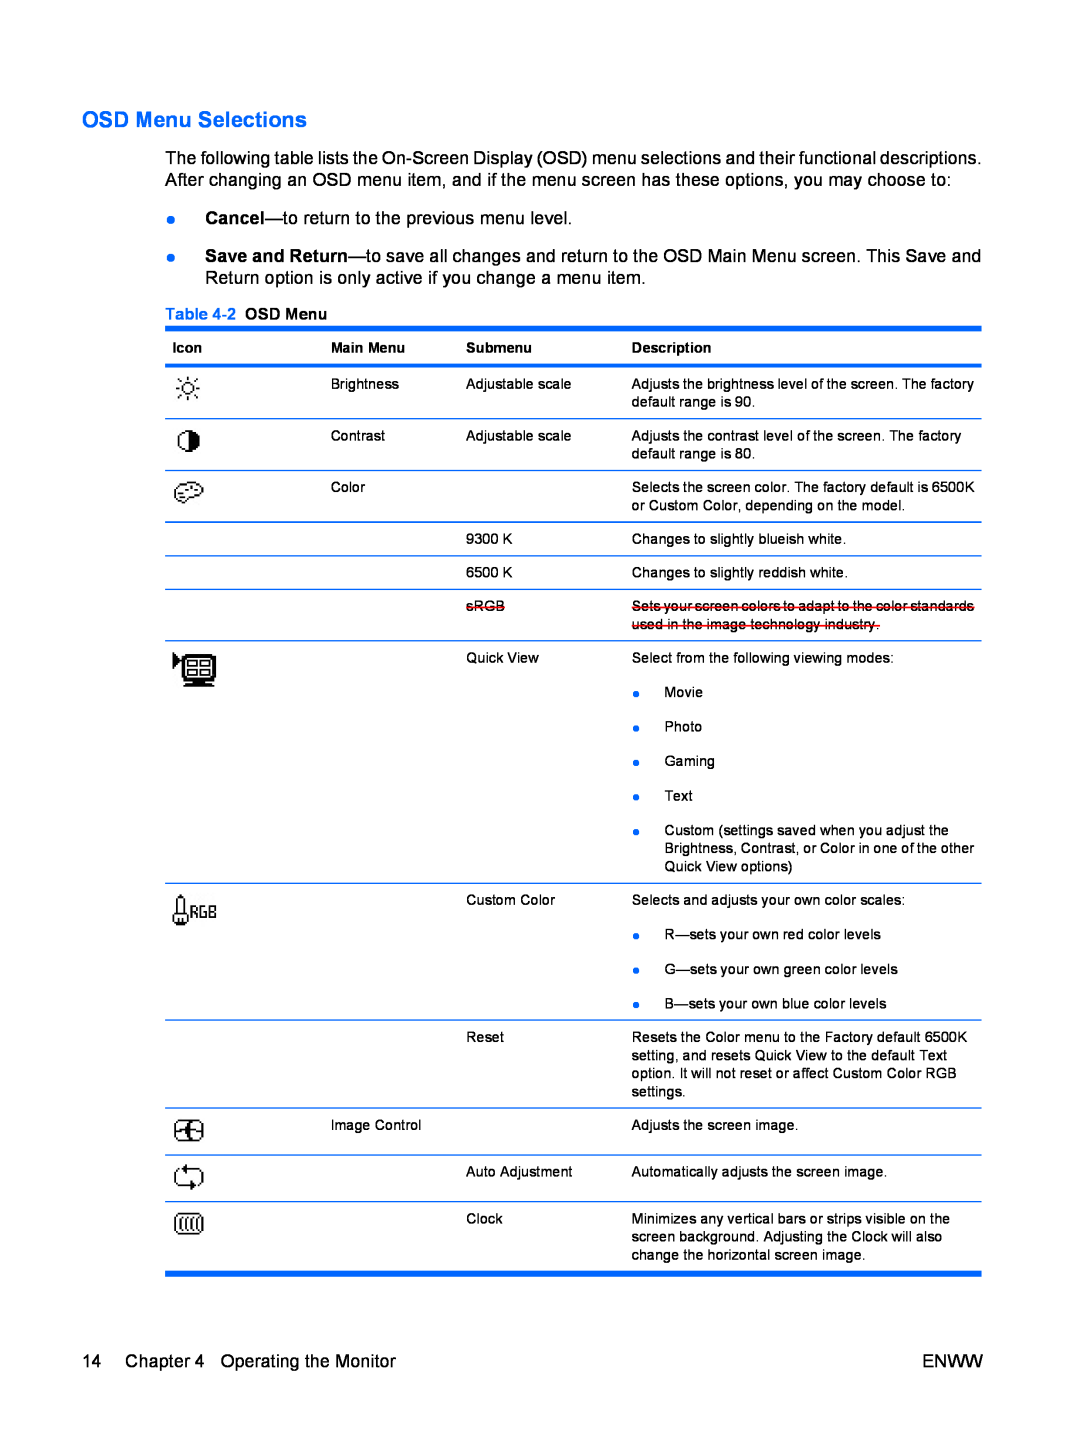 HP CQ1859s, CQ1859E manual OSD Menu Selections, 2 OSD Menu, Icon, Main Menu, Submenu, Description 